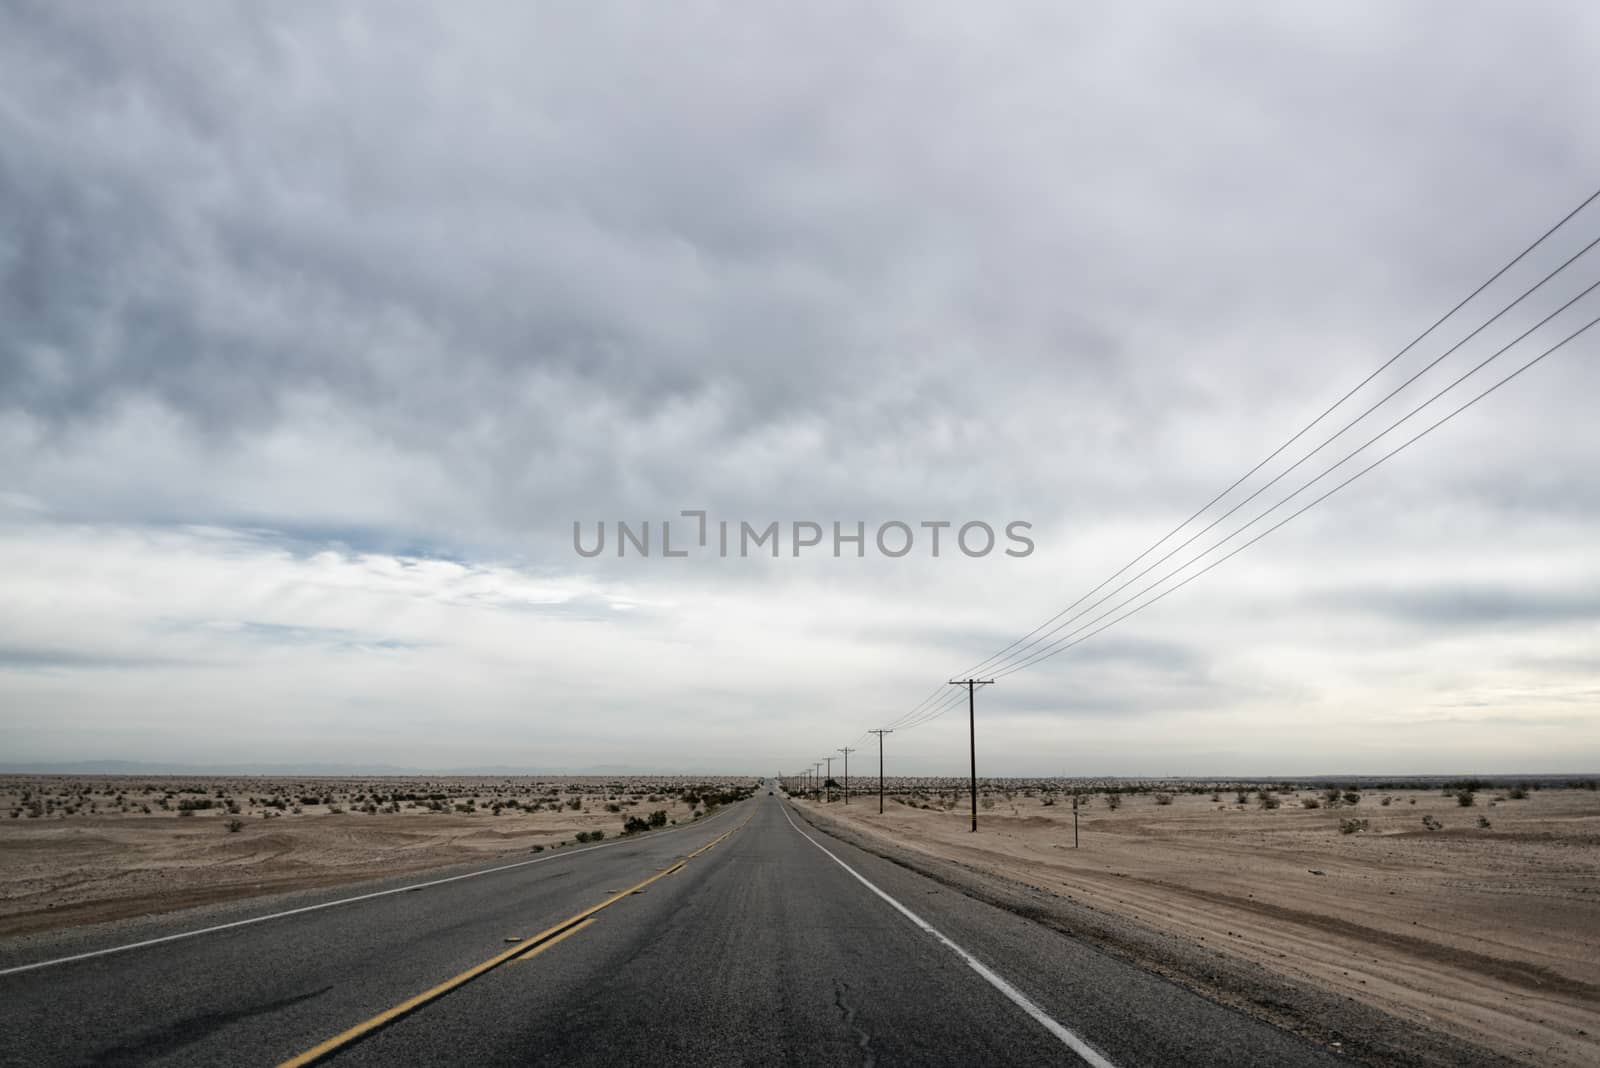 Landscape in the Anza-Borrego Desert  by patricklienin